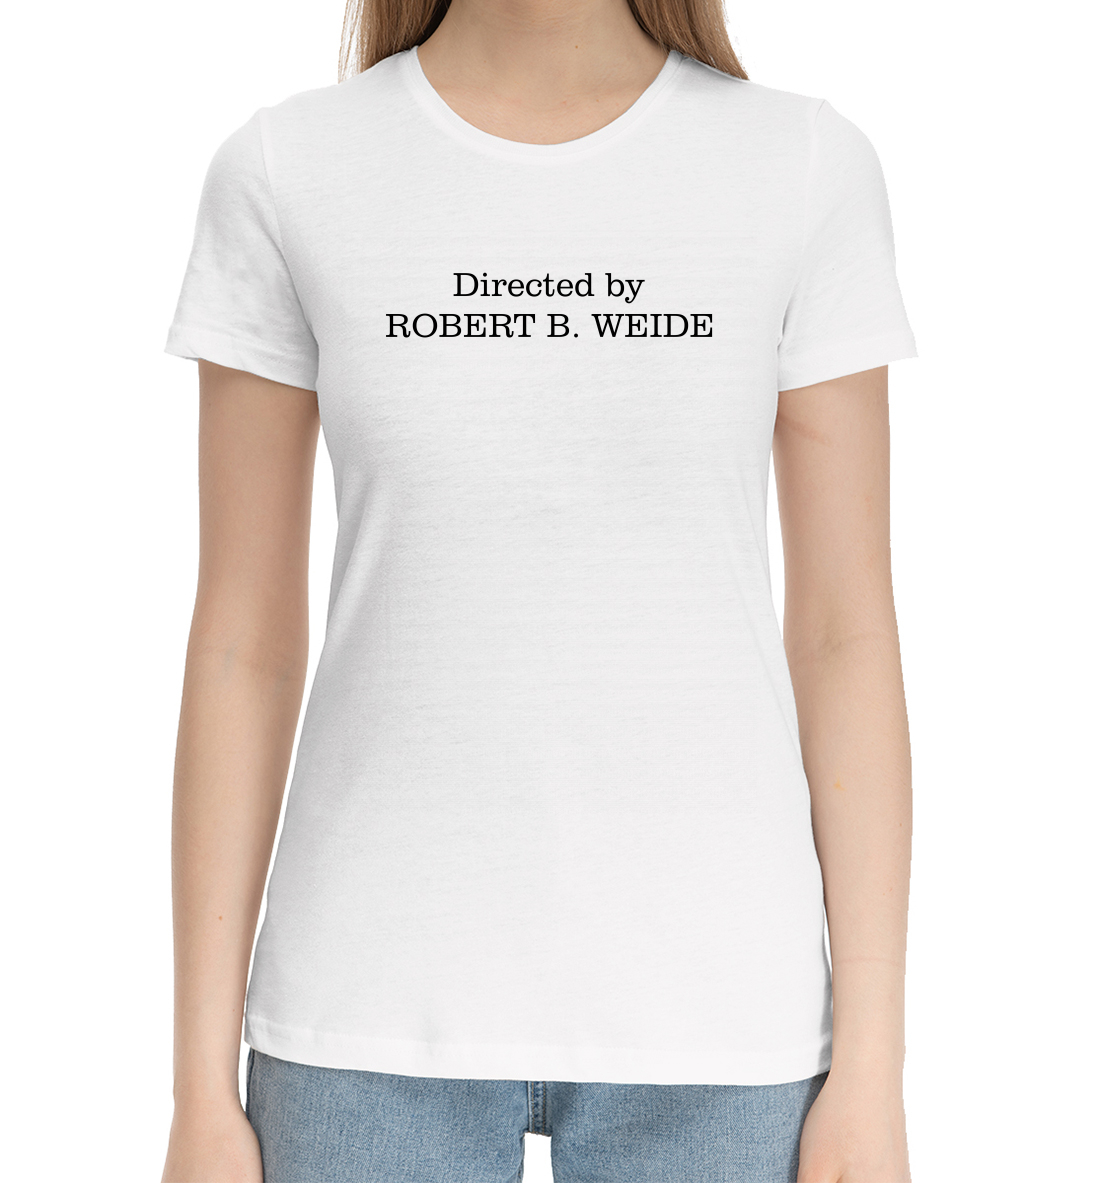 Женская Хлопковая футболка с надписью Directed by ROBERT B. WEIDE, артикул MEM-878882-hfu-1mp